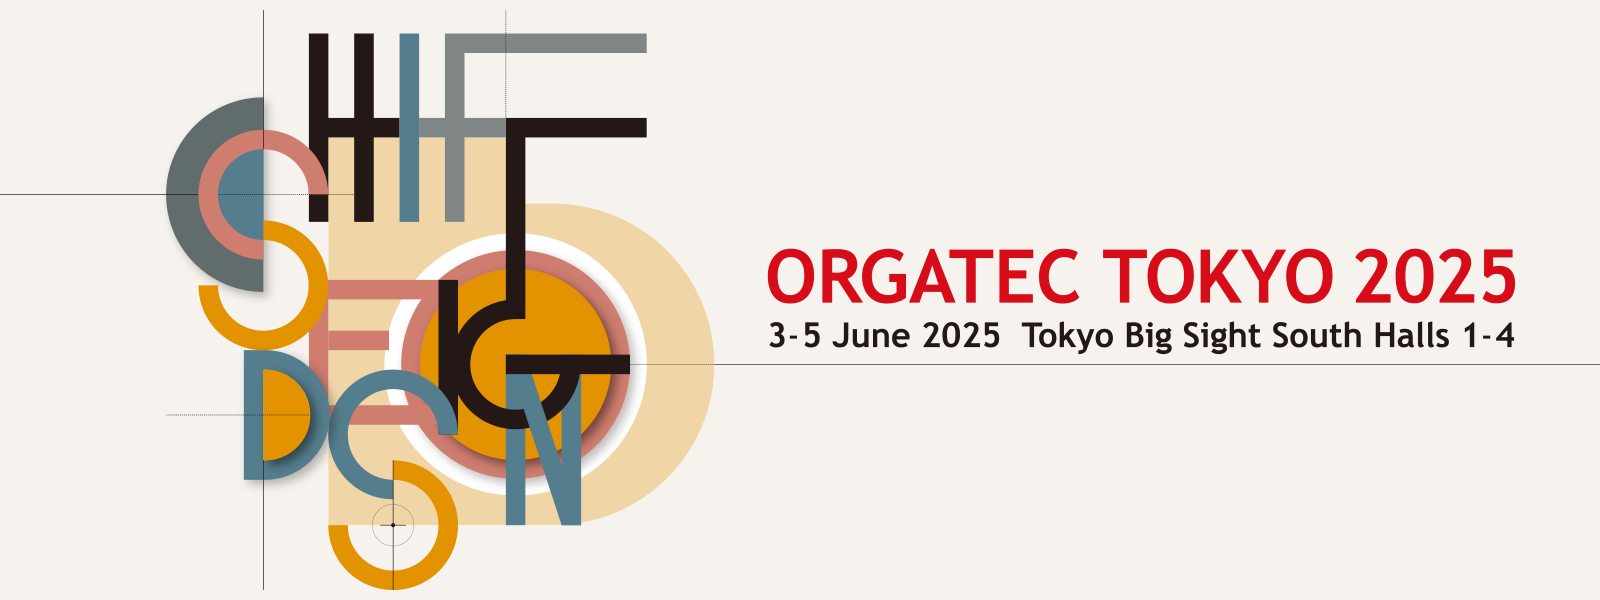 ORGATEC TOKYO 2025